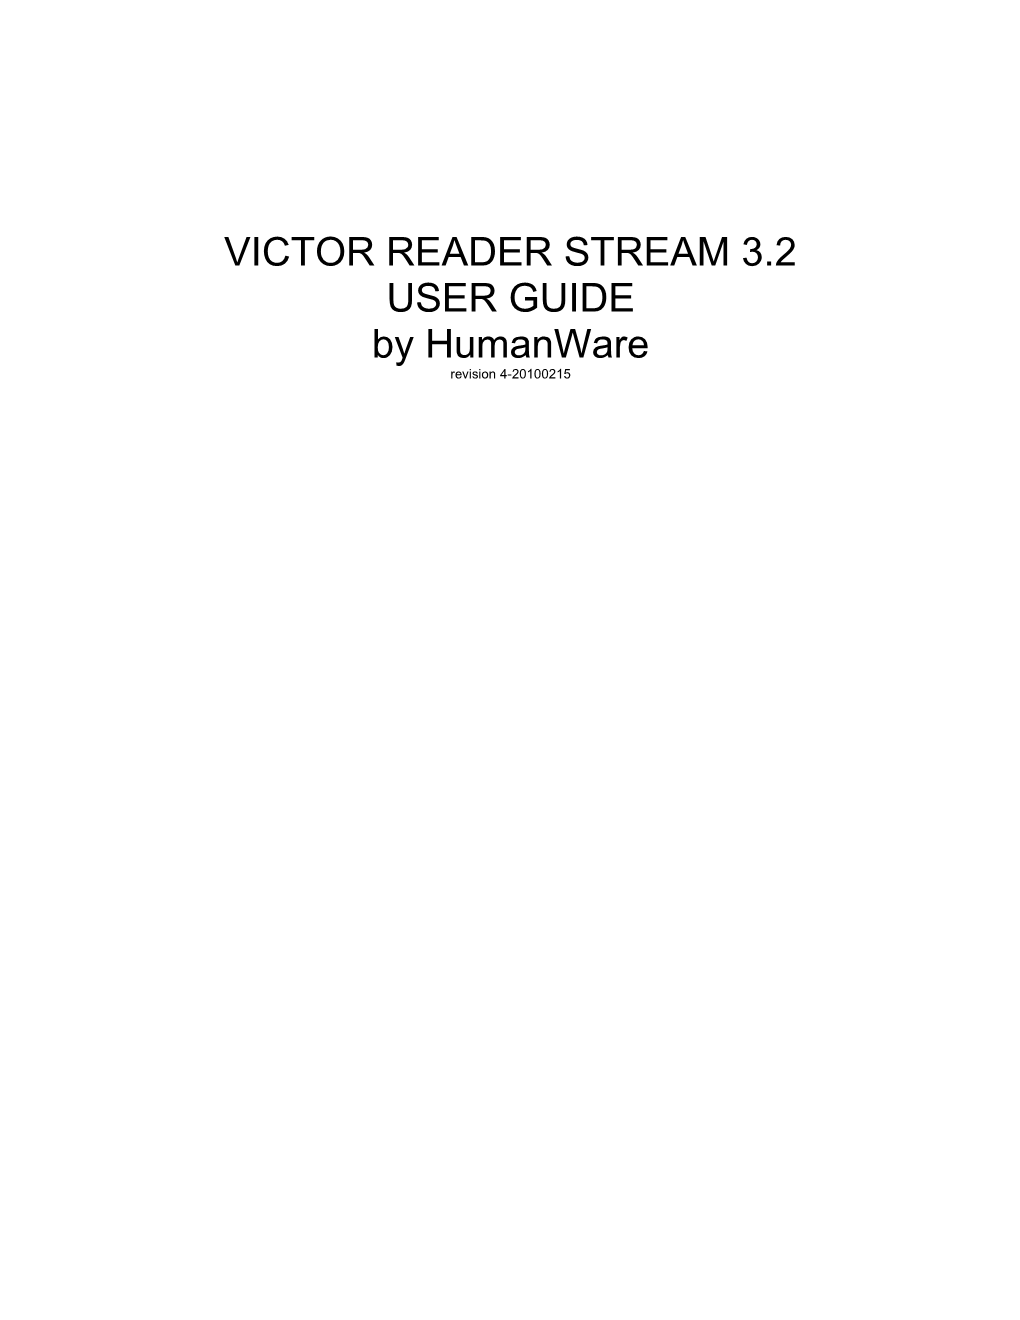 Victor Reader Stream 3.1 User Guide